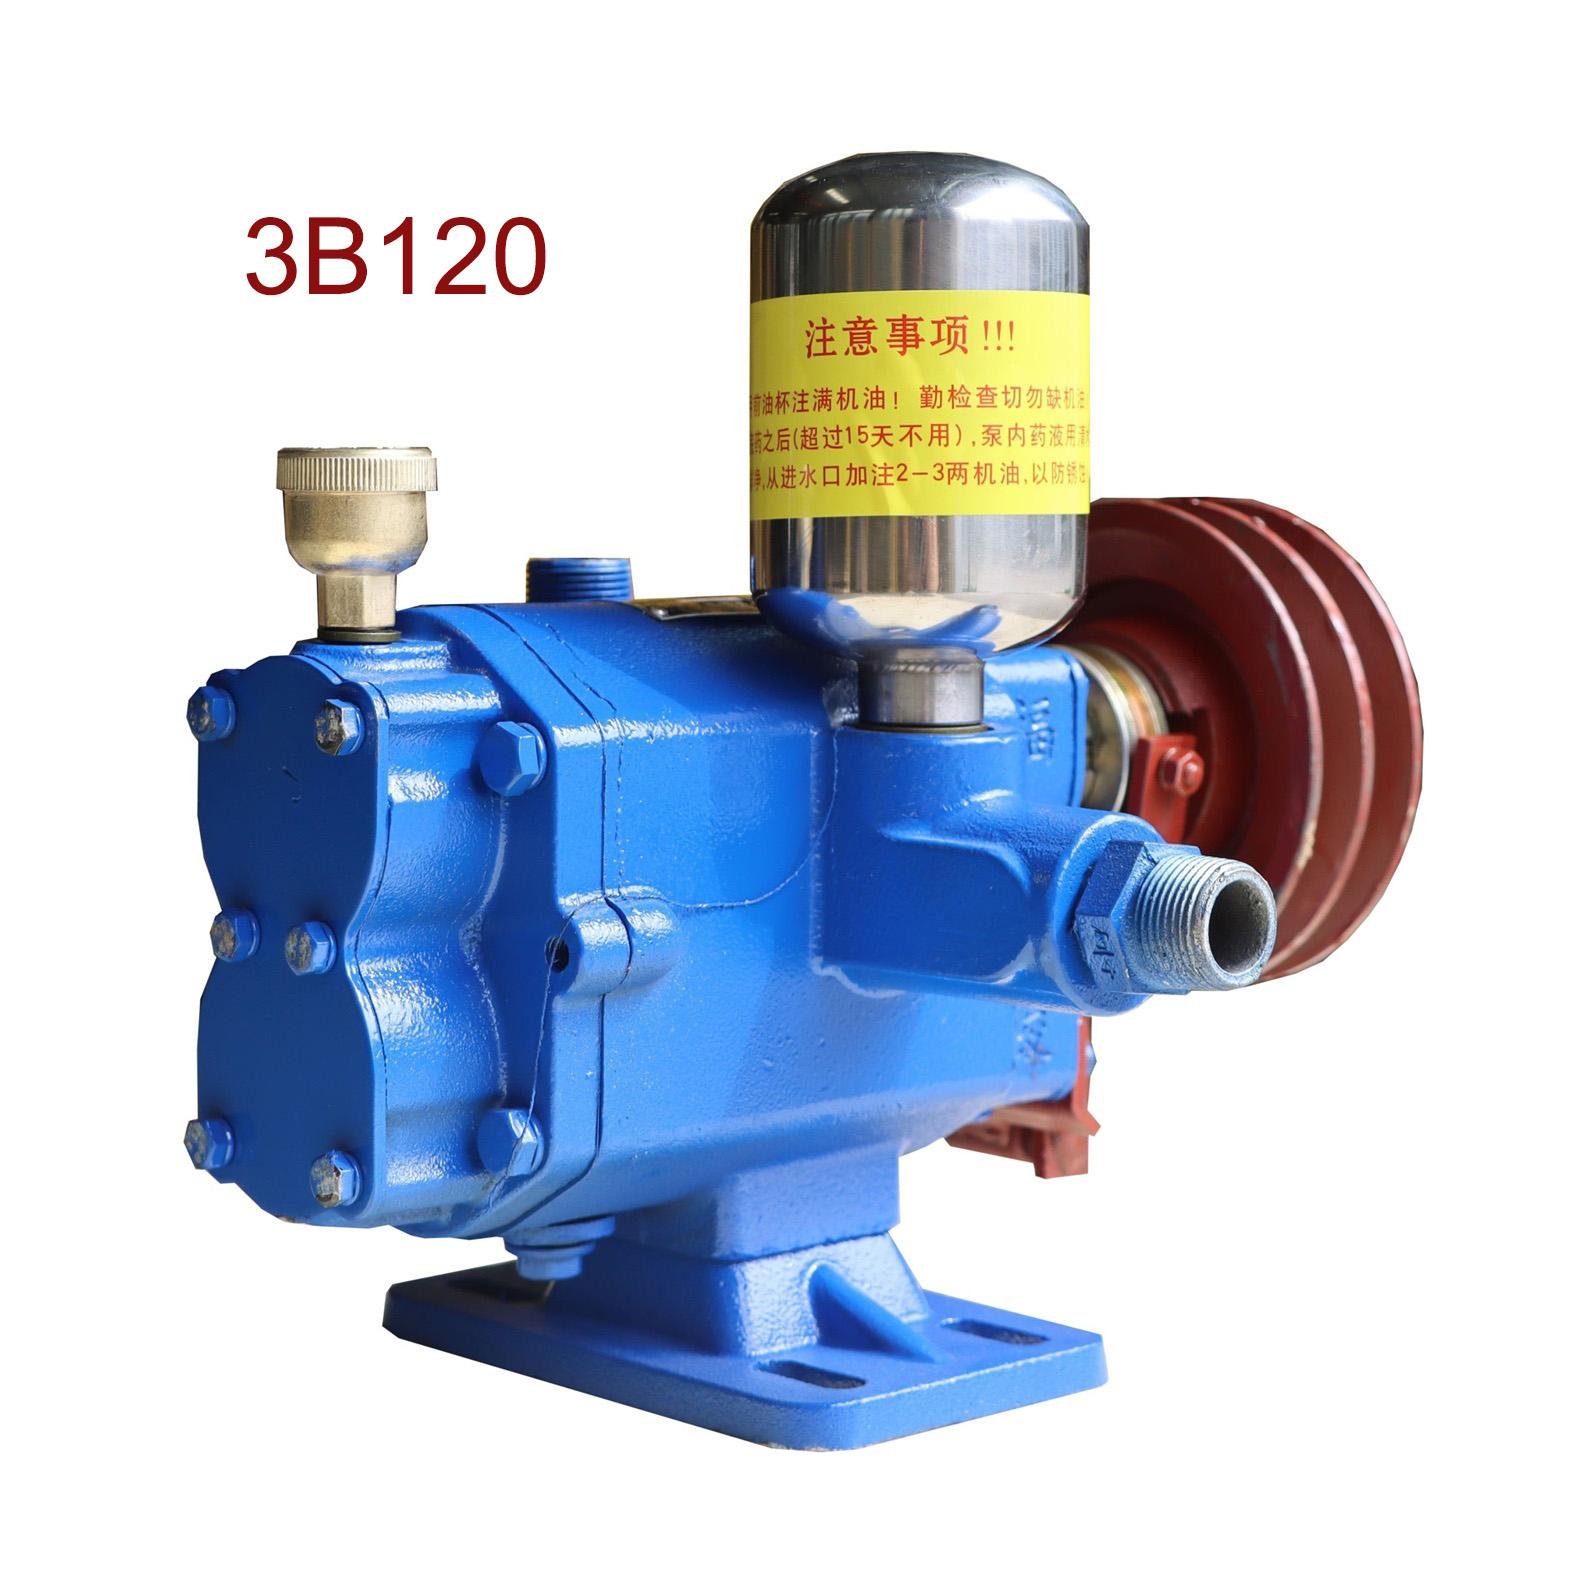 Agricultural High pressure atomizer sprayer pump 4